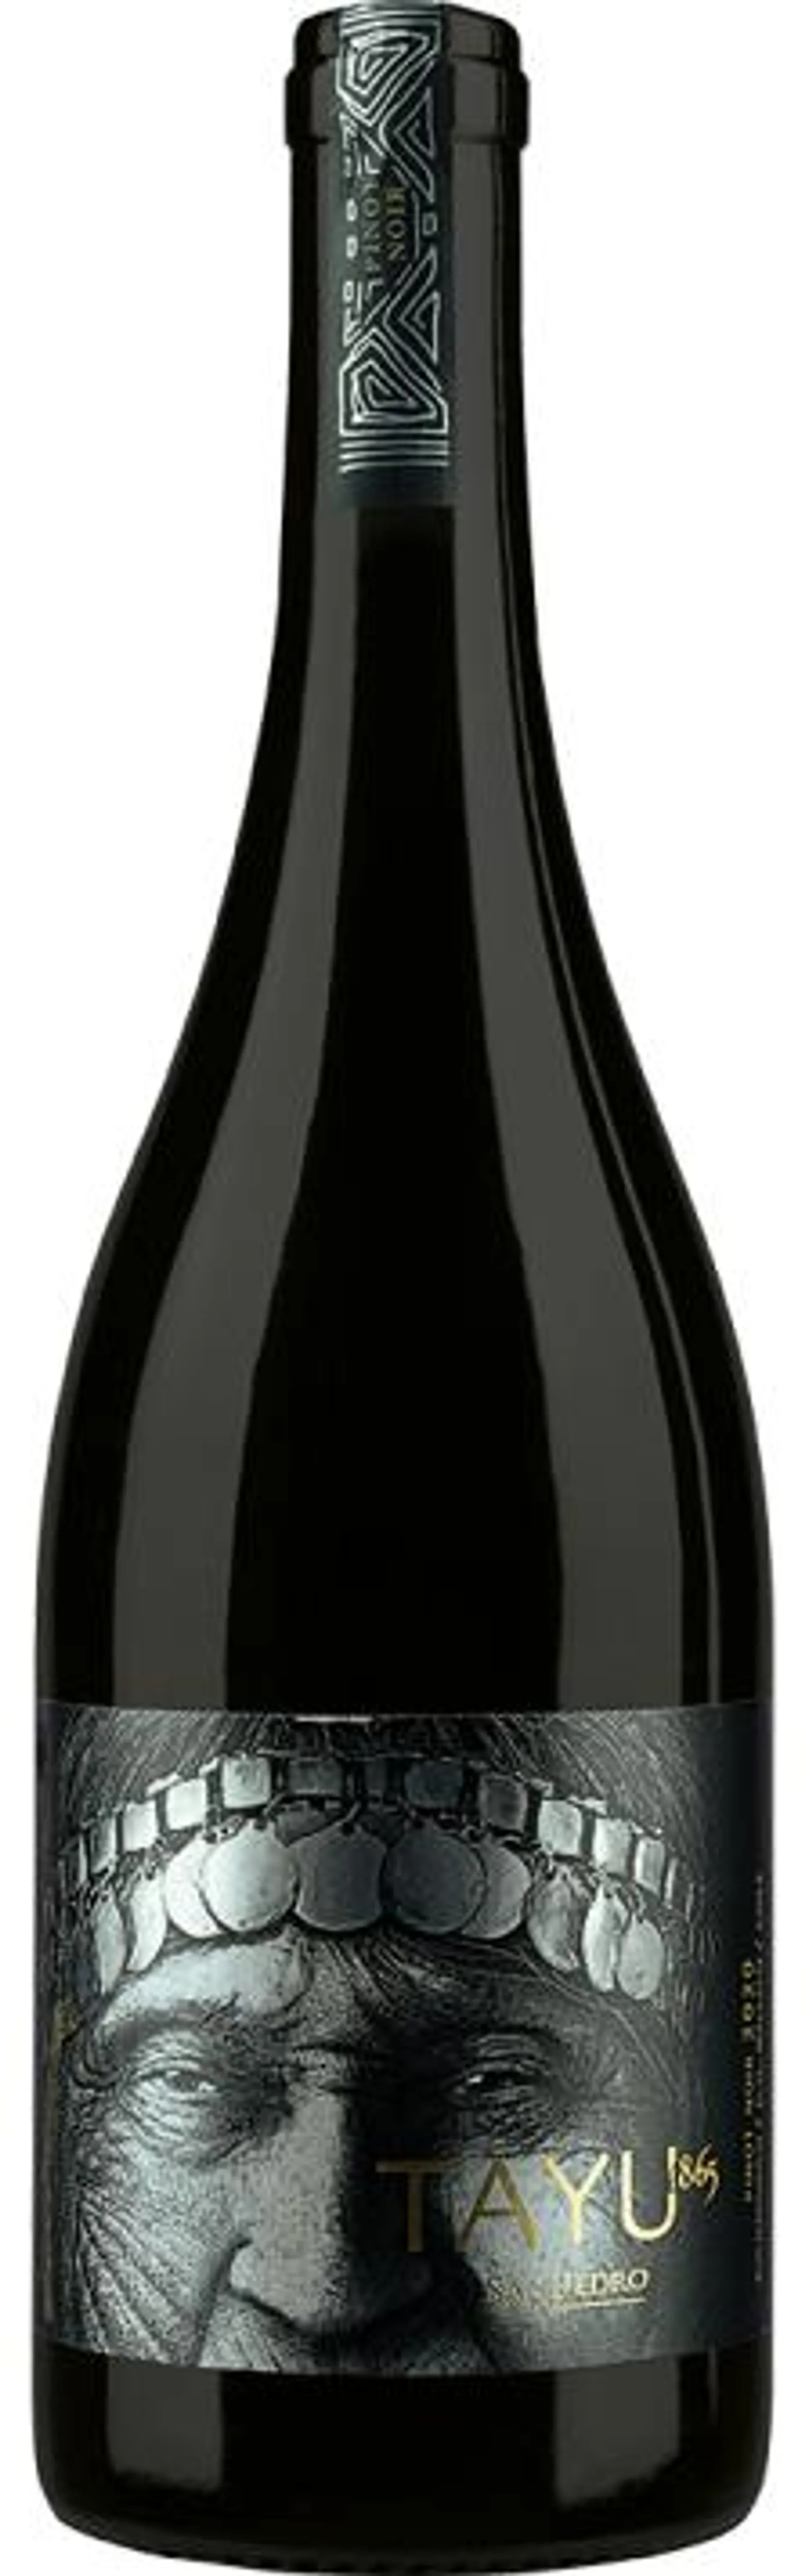 2020 Pinot Noir Tayu 1865